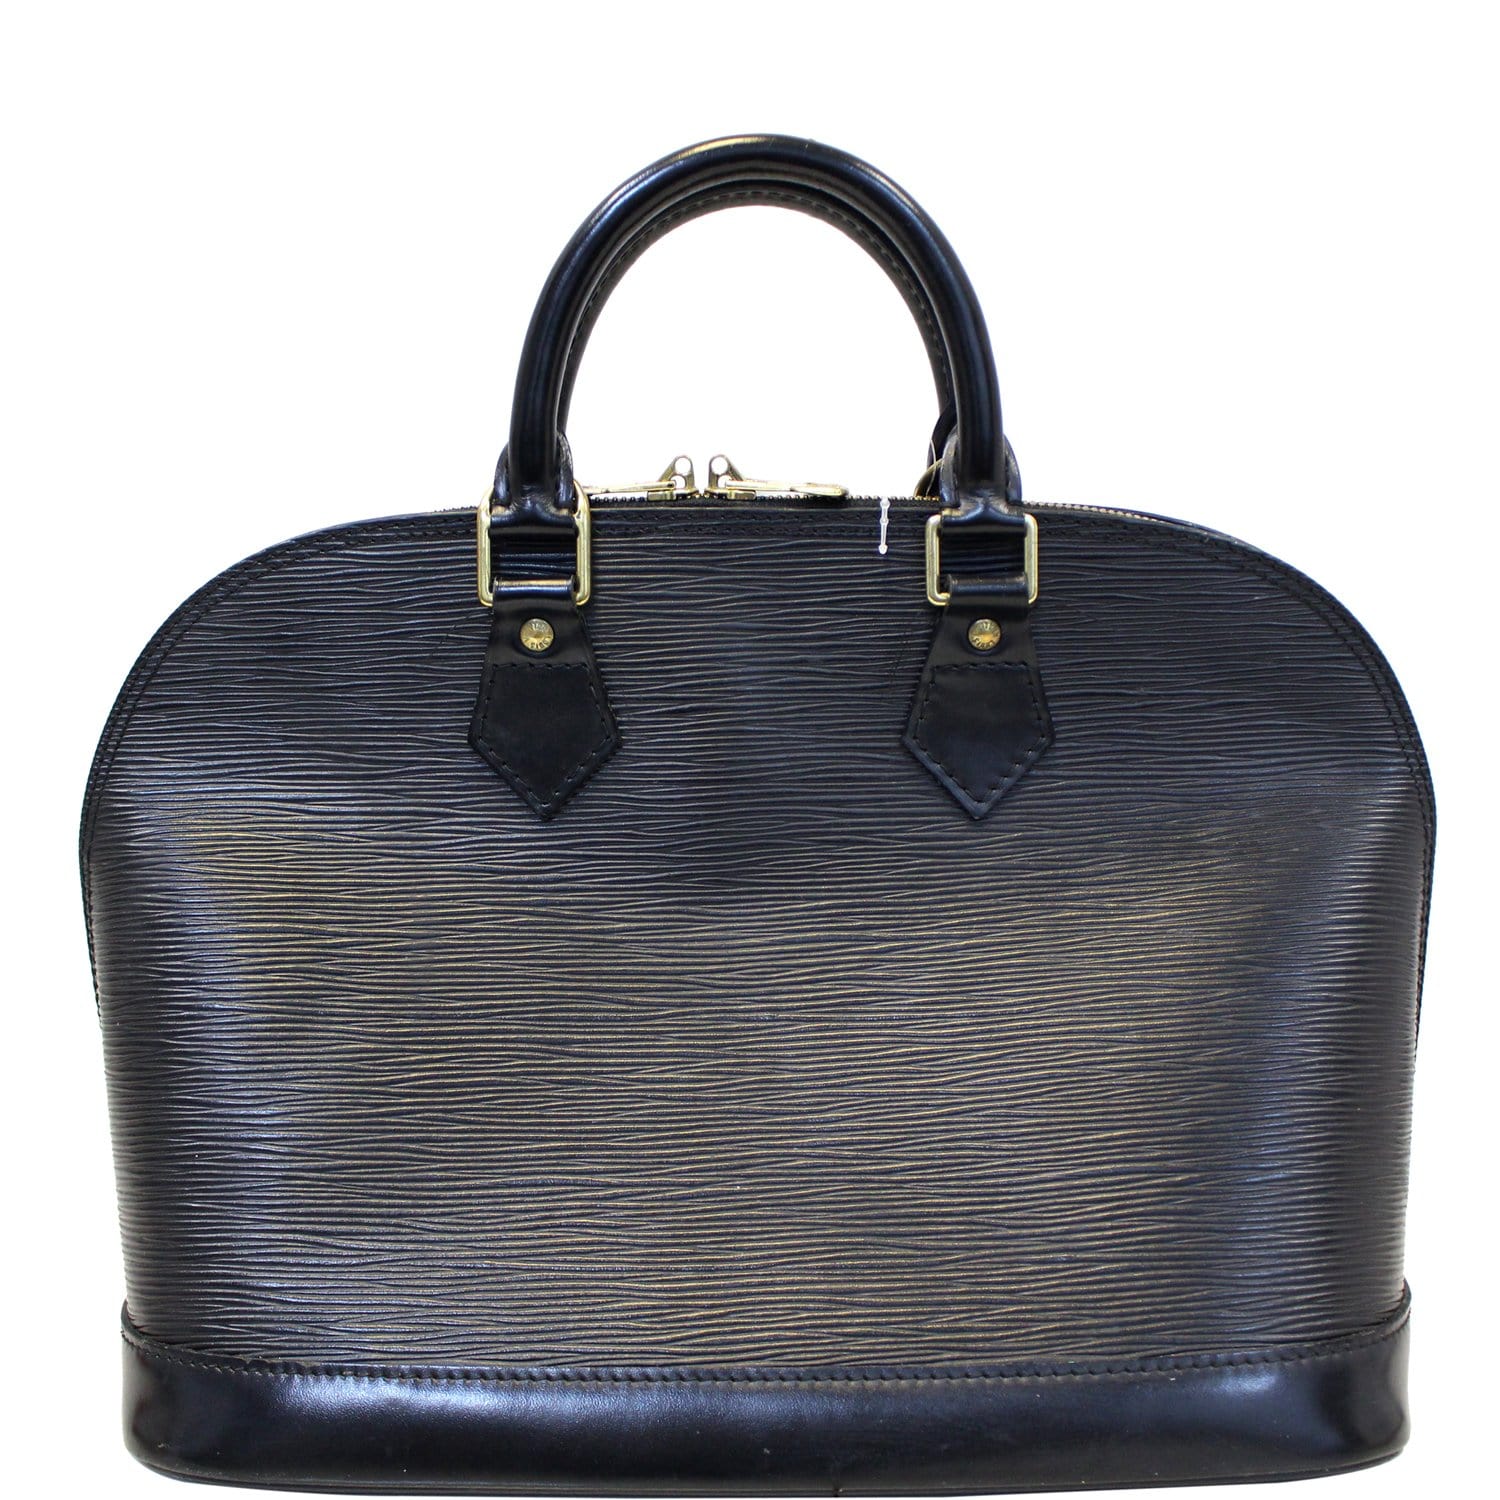 Louis Vuitton Alma Top Handle Bag in Epi Leather, Hardware